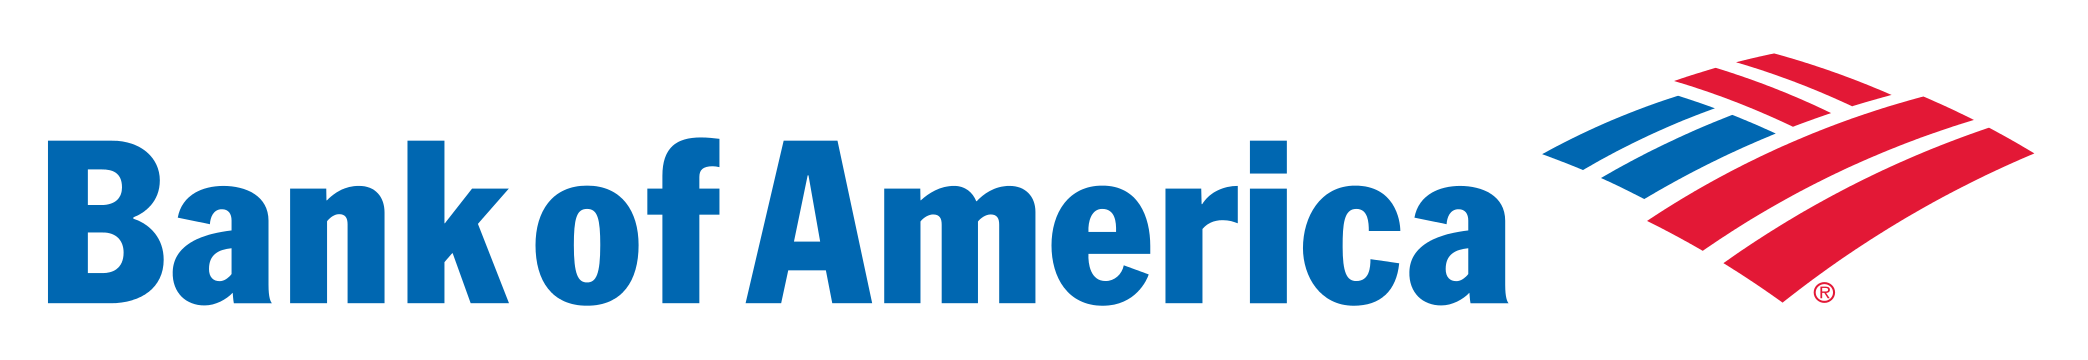 Bank Of America Logo Png Image Purepng Free Transparent Cc0 Png